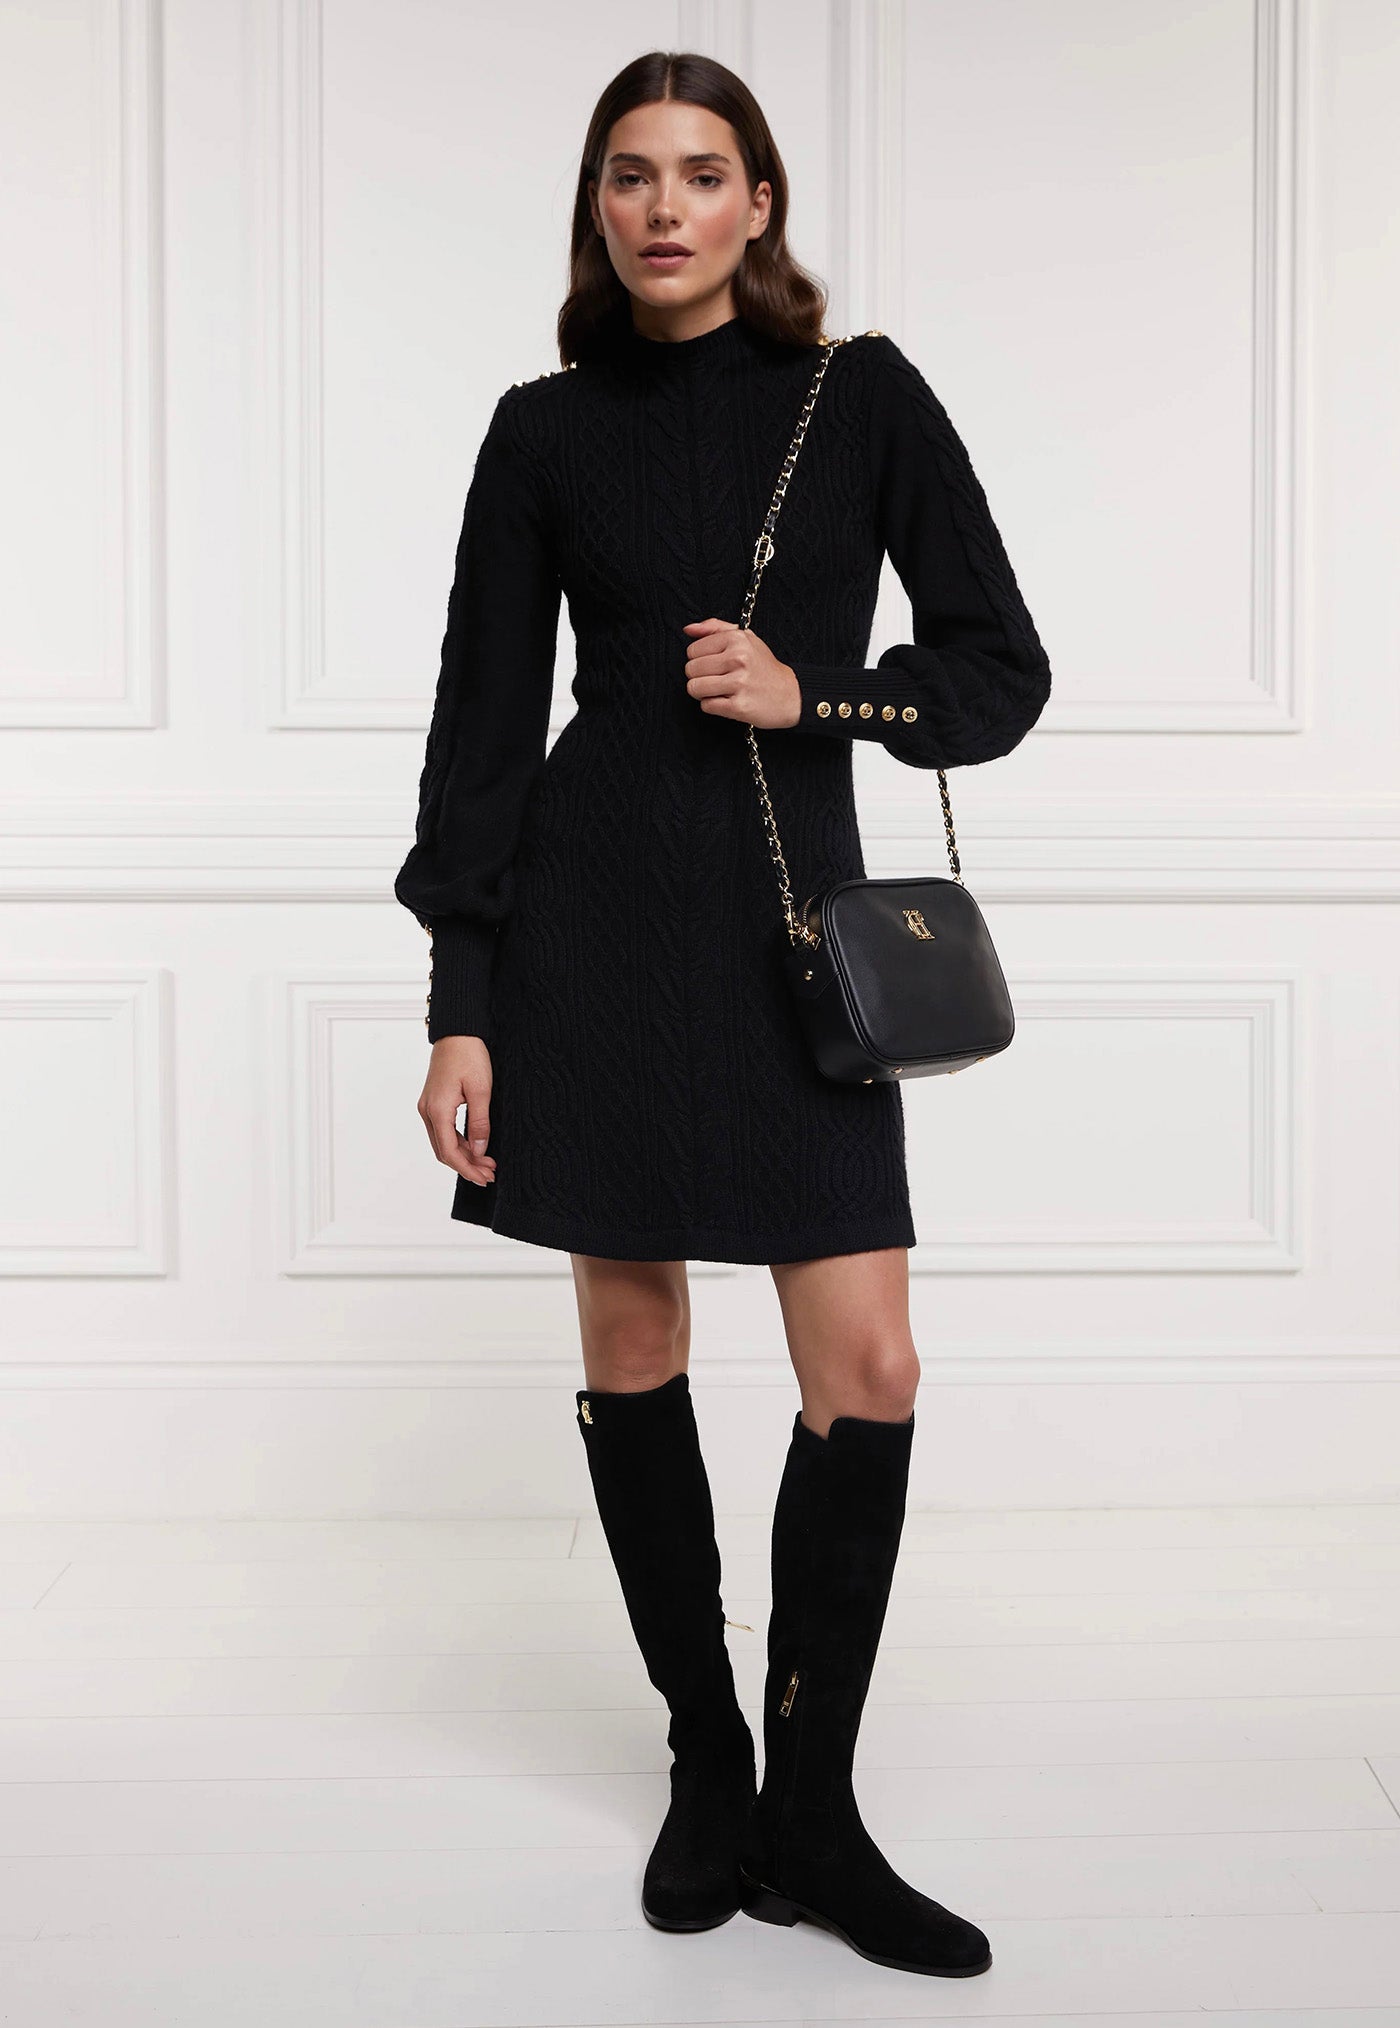 Rachel Mini Dress - Black sold by Angel Divine